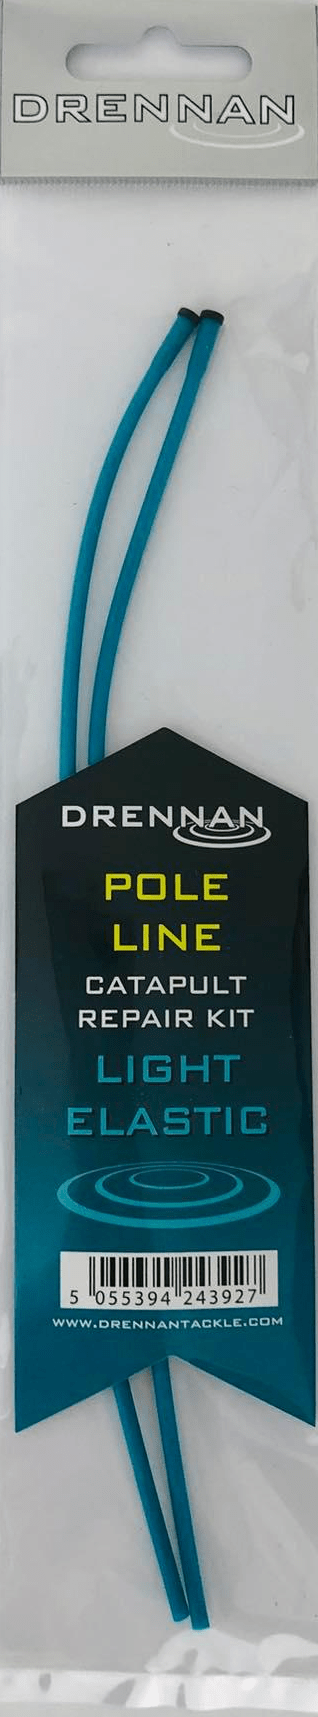 drennan pole line catapult katapult  repair kit light elastic